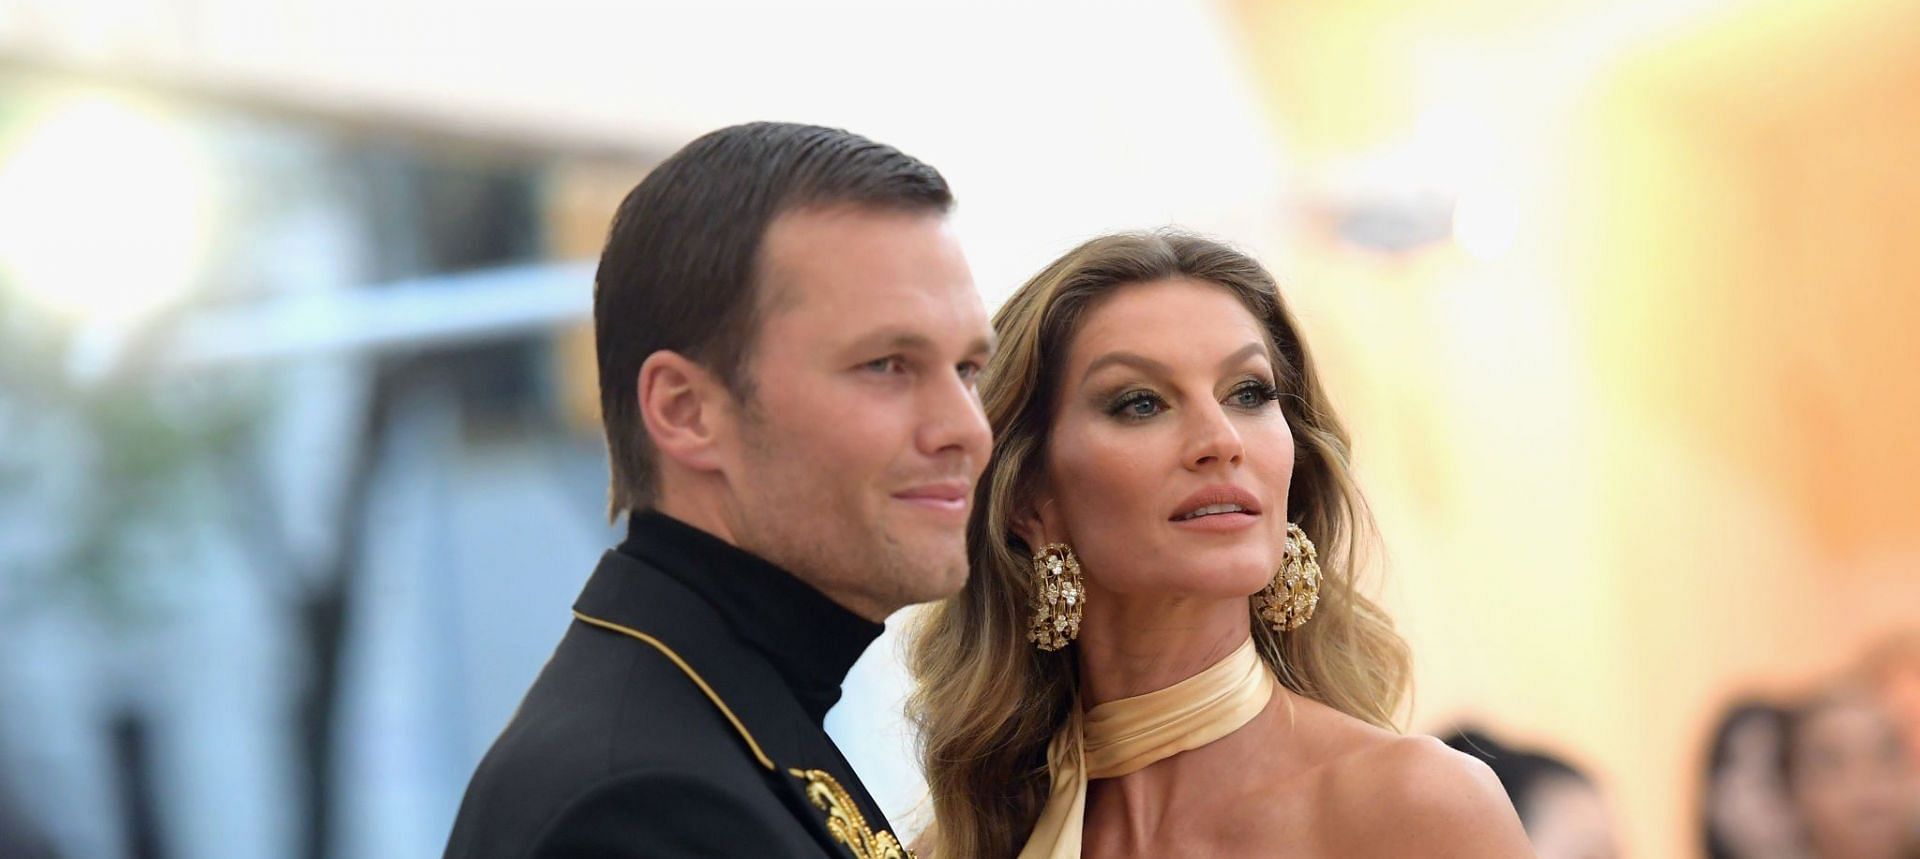 Tom Brady Shades Gisele Bundchen Amid Divorce, NFL Drama – StyleCaster